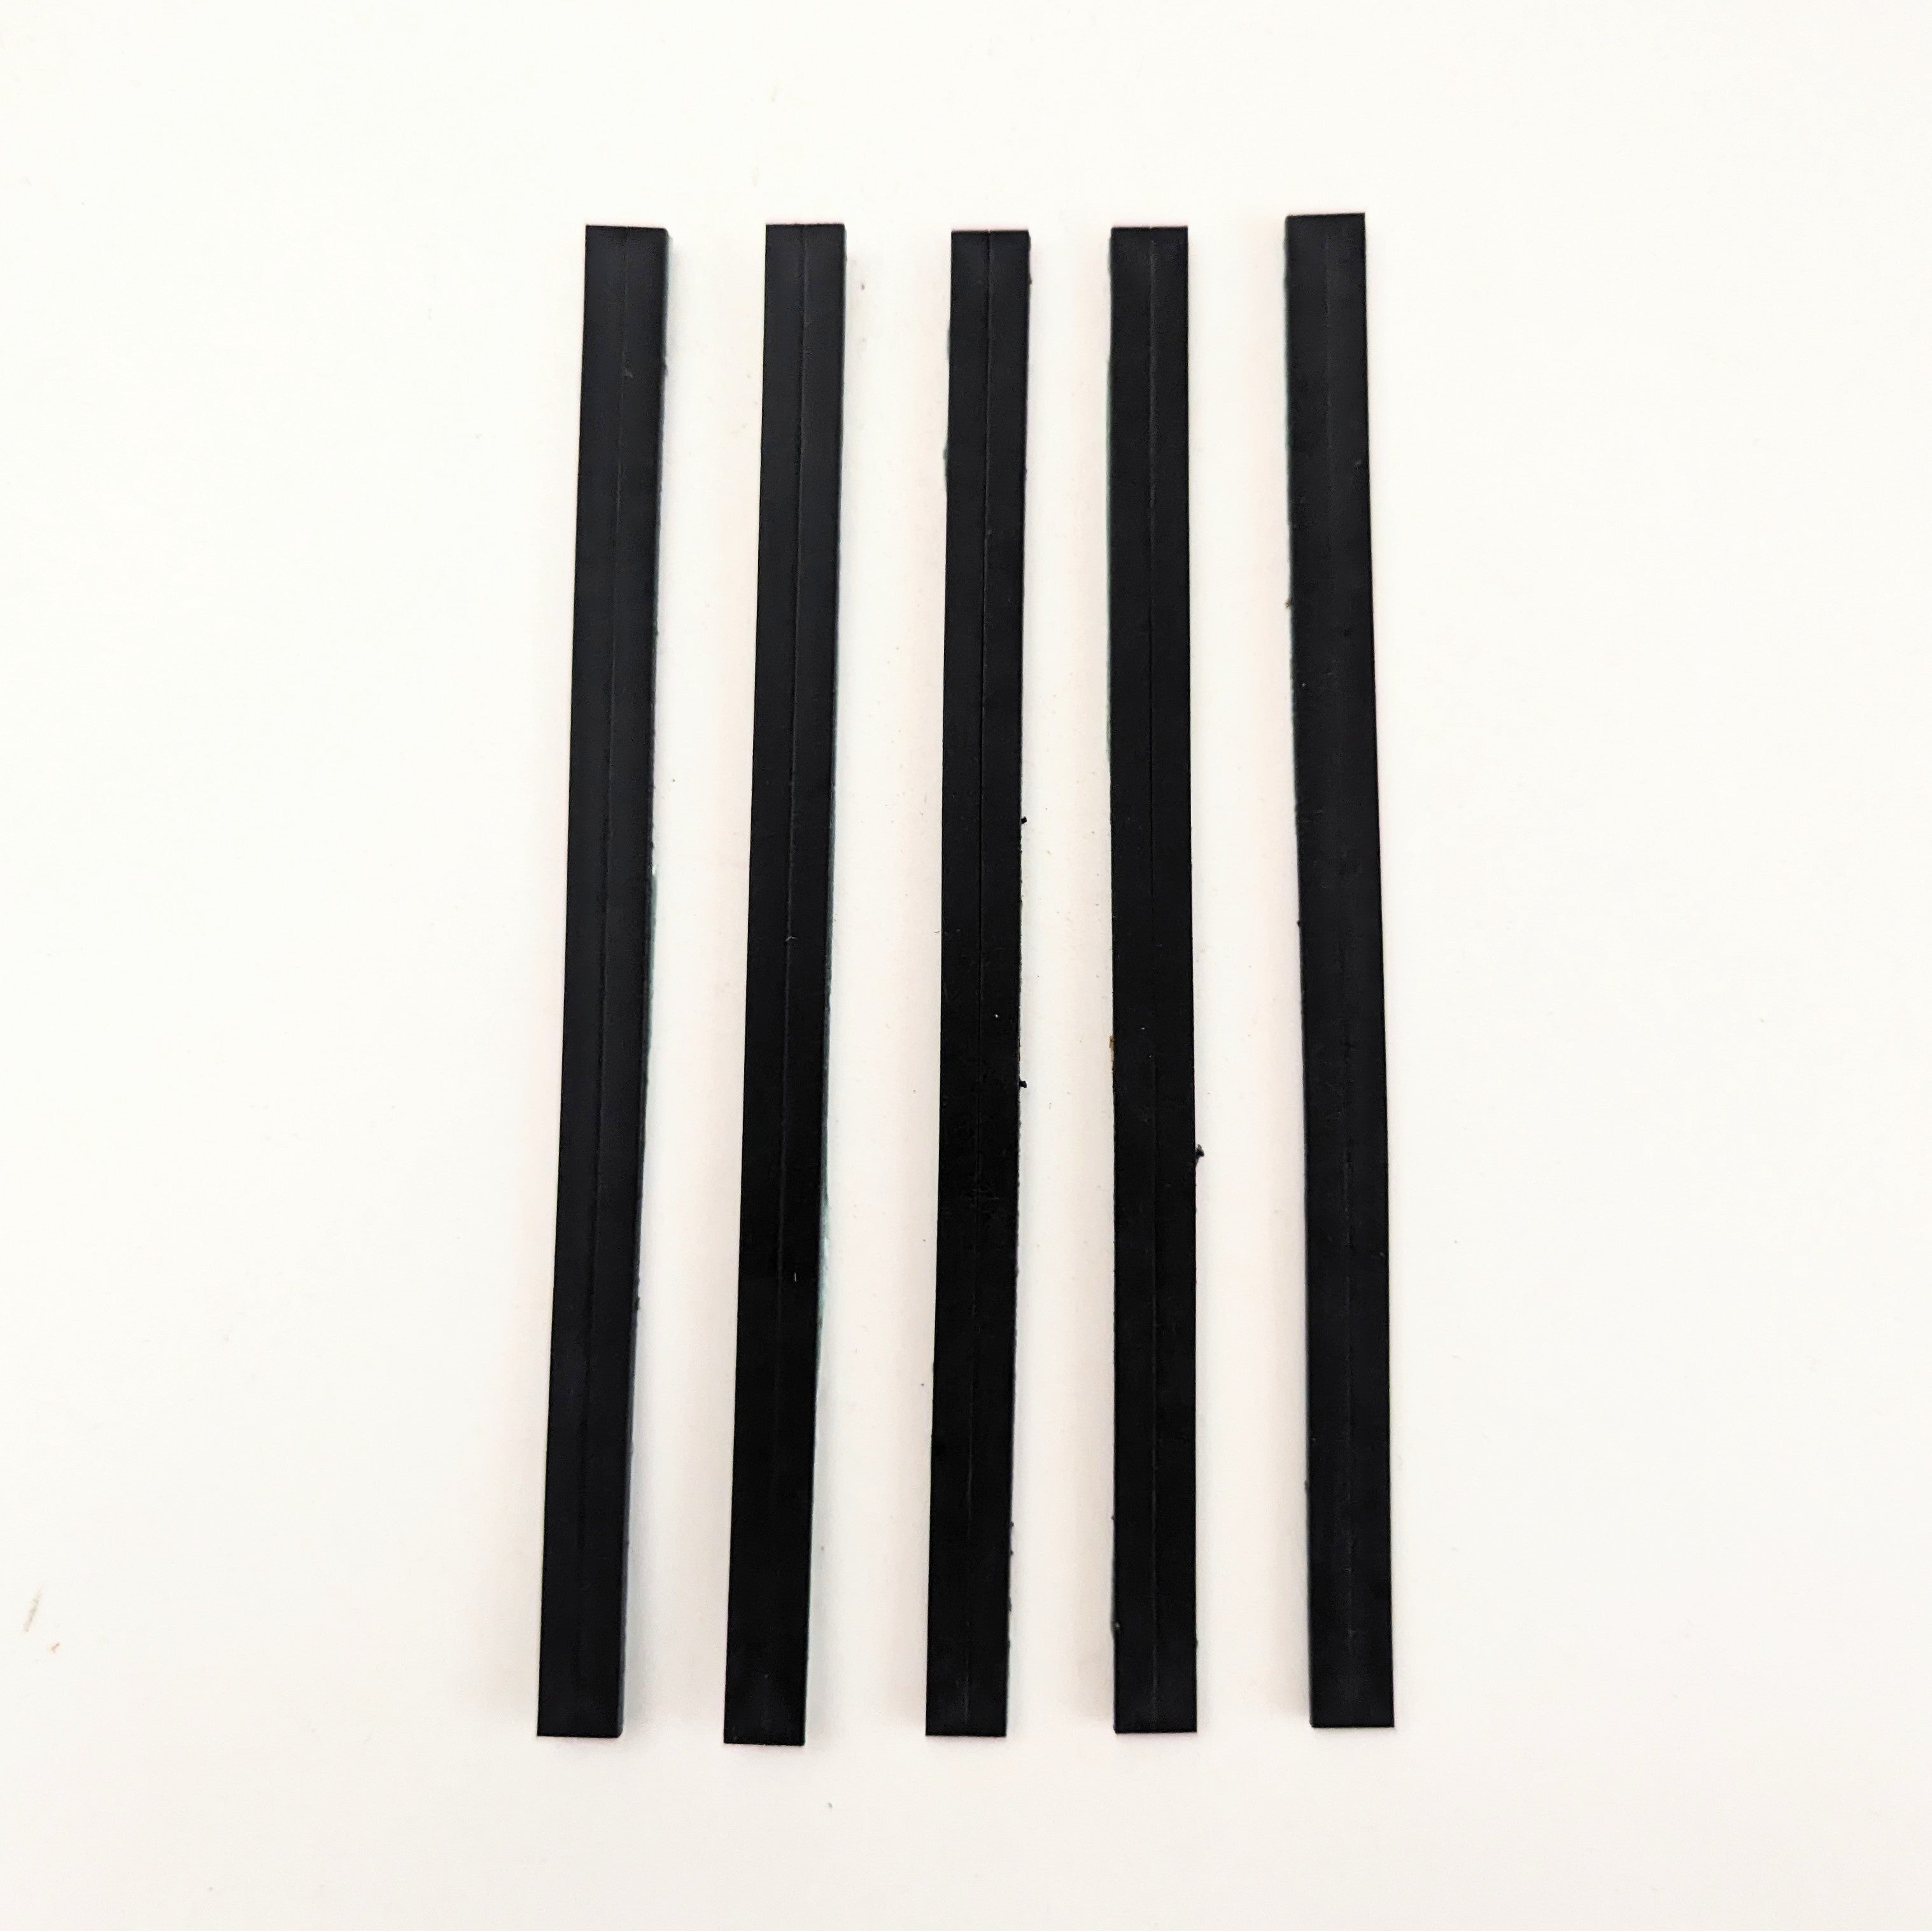 Rubber strips for MK2 Rear Mudhuggers